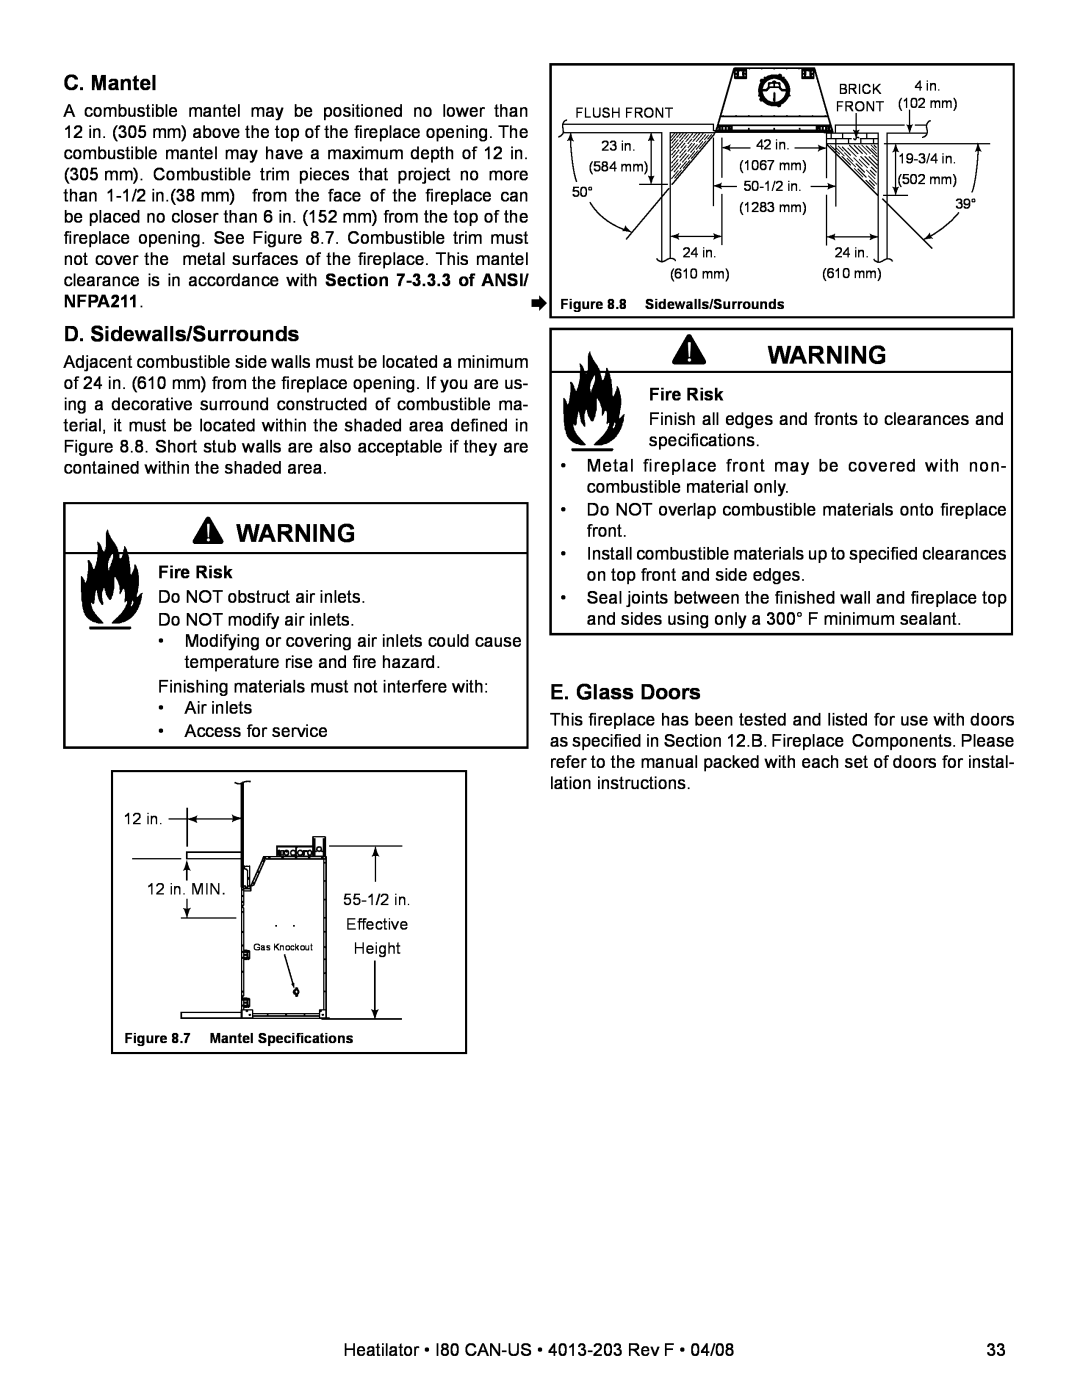 Heatiator I80 owner manual C. Mantel, D. Sidewalls/Surrounds, E. Glass Doors, NFPA211, Fire Risk 